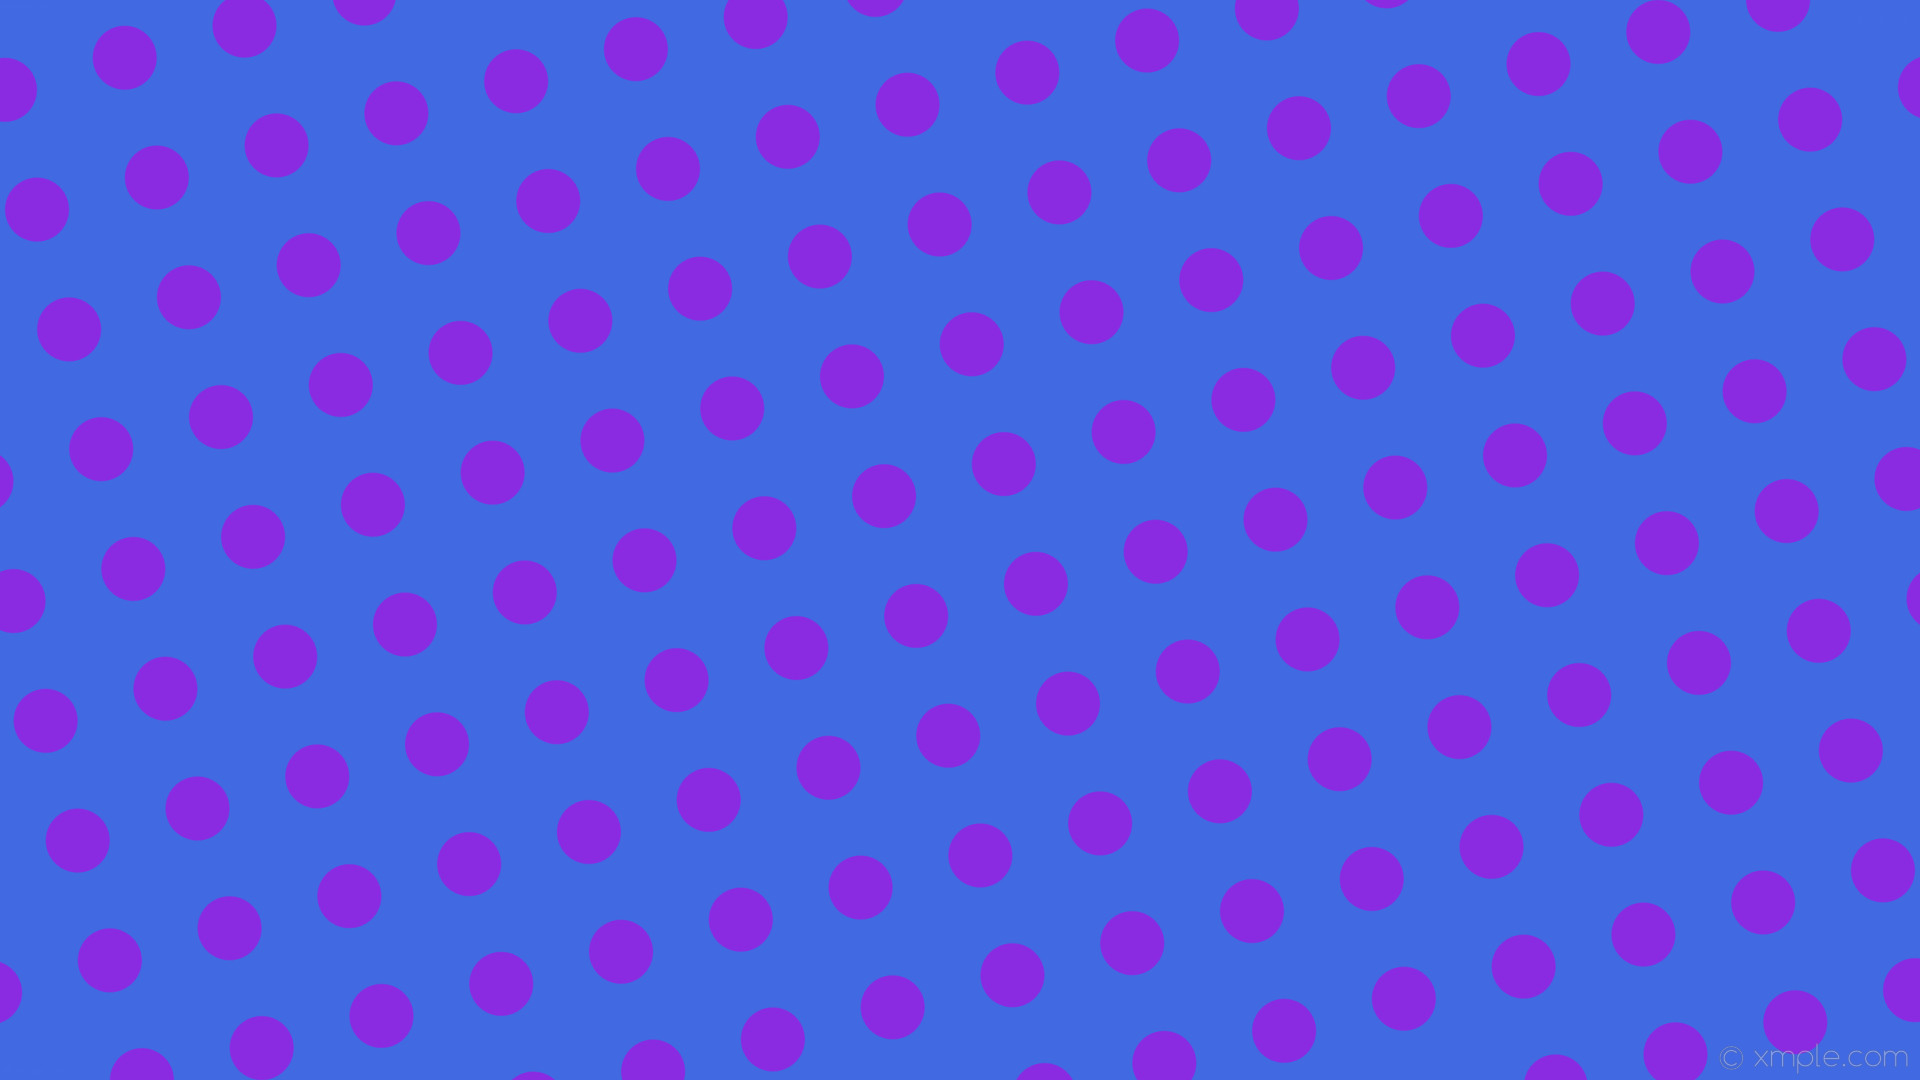 1920x1080 wallpaper dots blue purple spots polka royal blue blue violet #4169e1  #8a2be2 285Â°